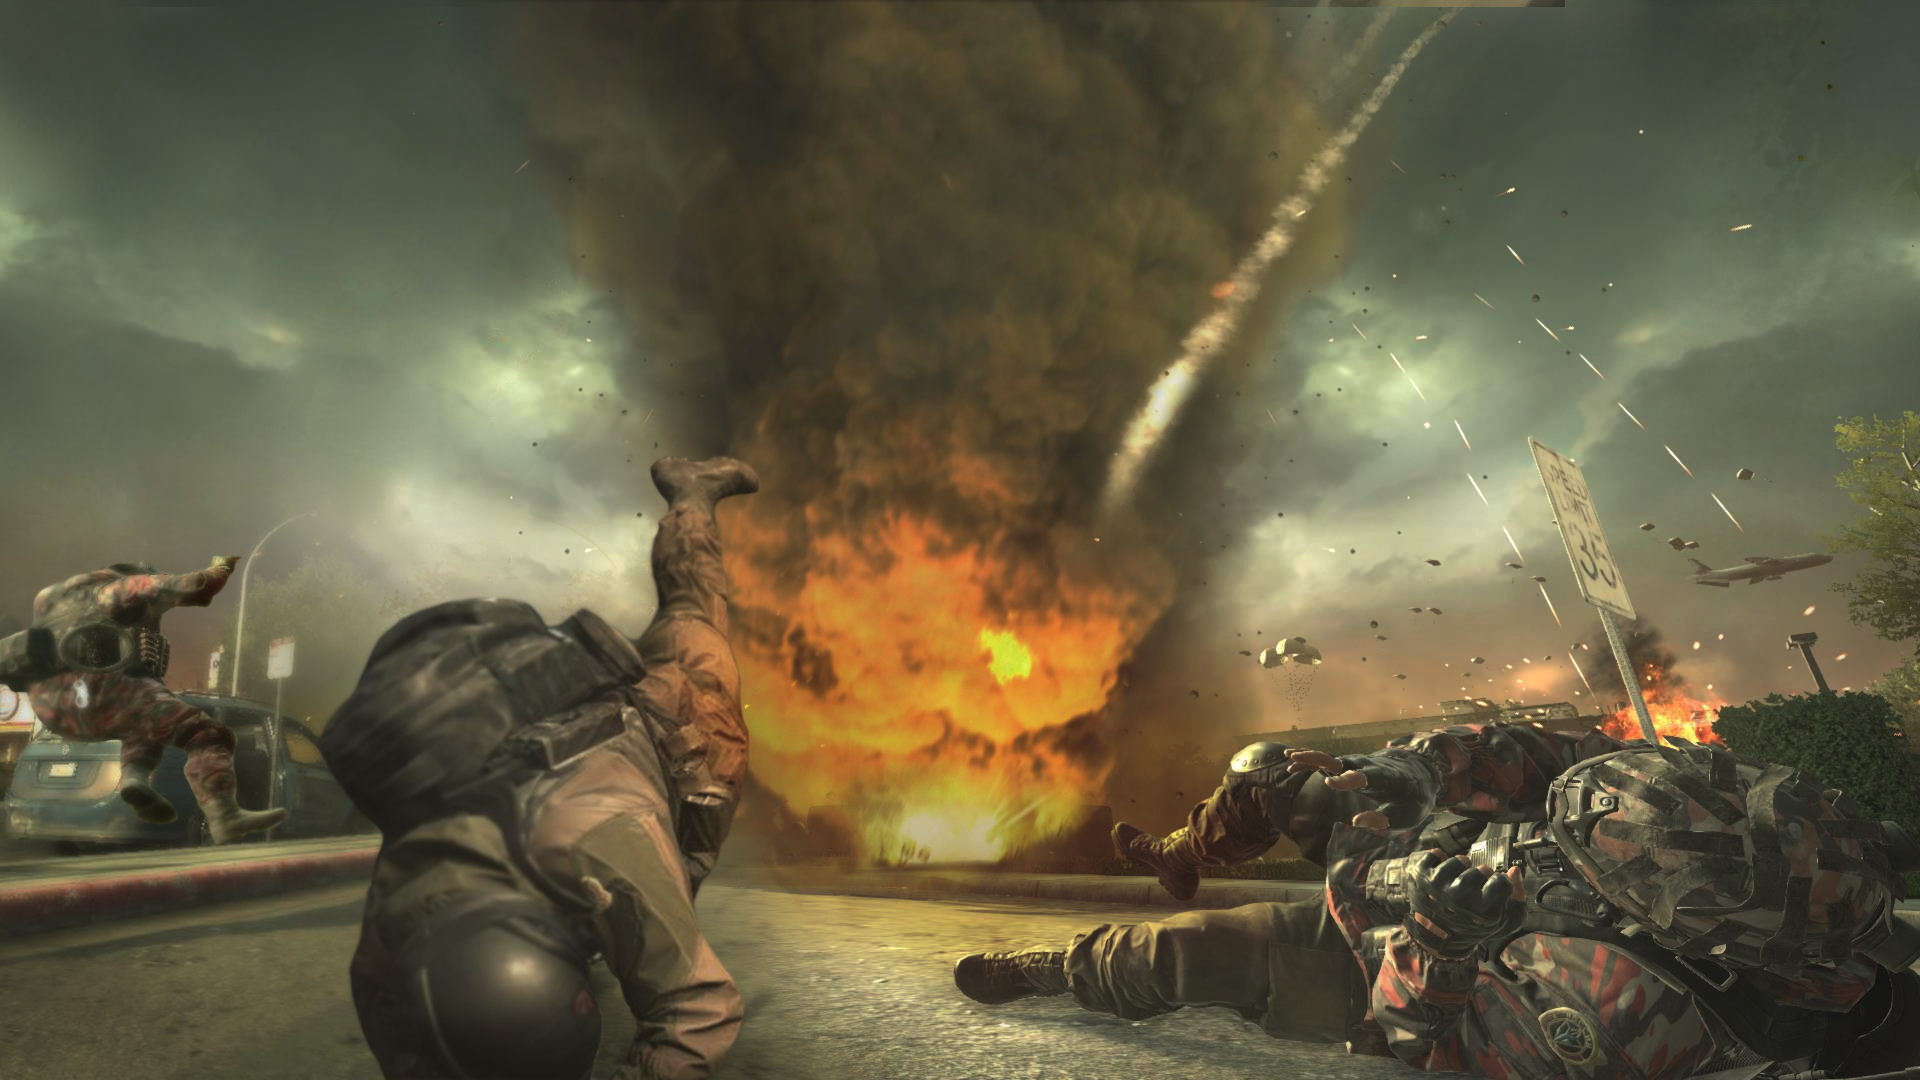 Modern Warfare 2. Mw2 Remastered. Call of Duty mw2 Remastered. Call of Duty: Modern Warfare 2 campaign Remastered.